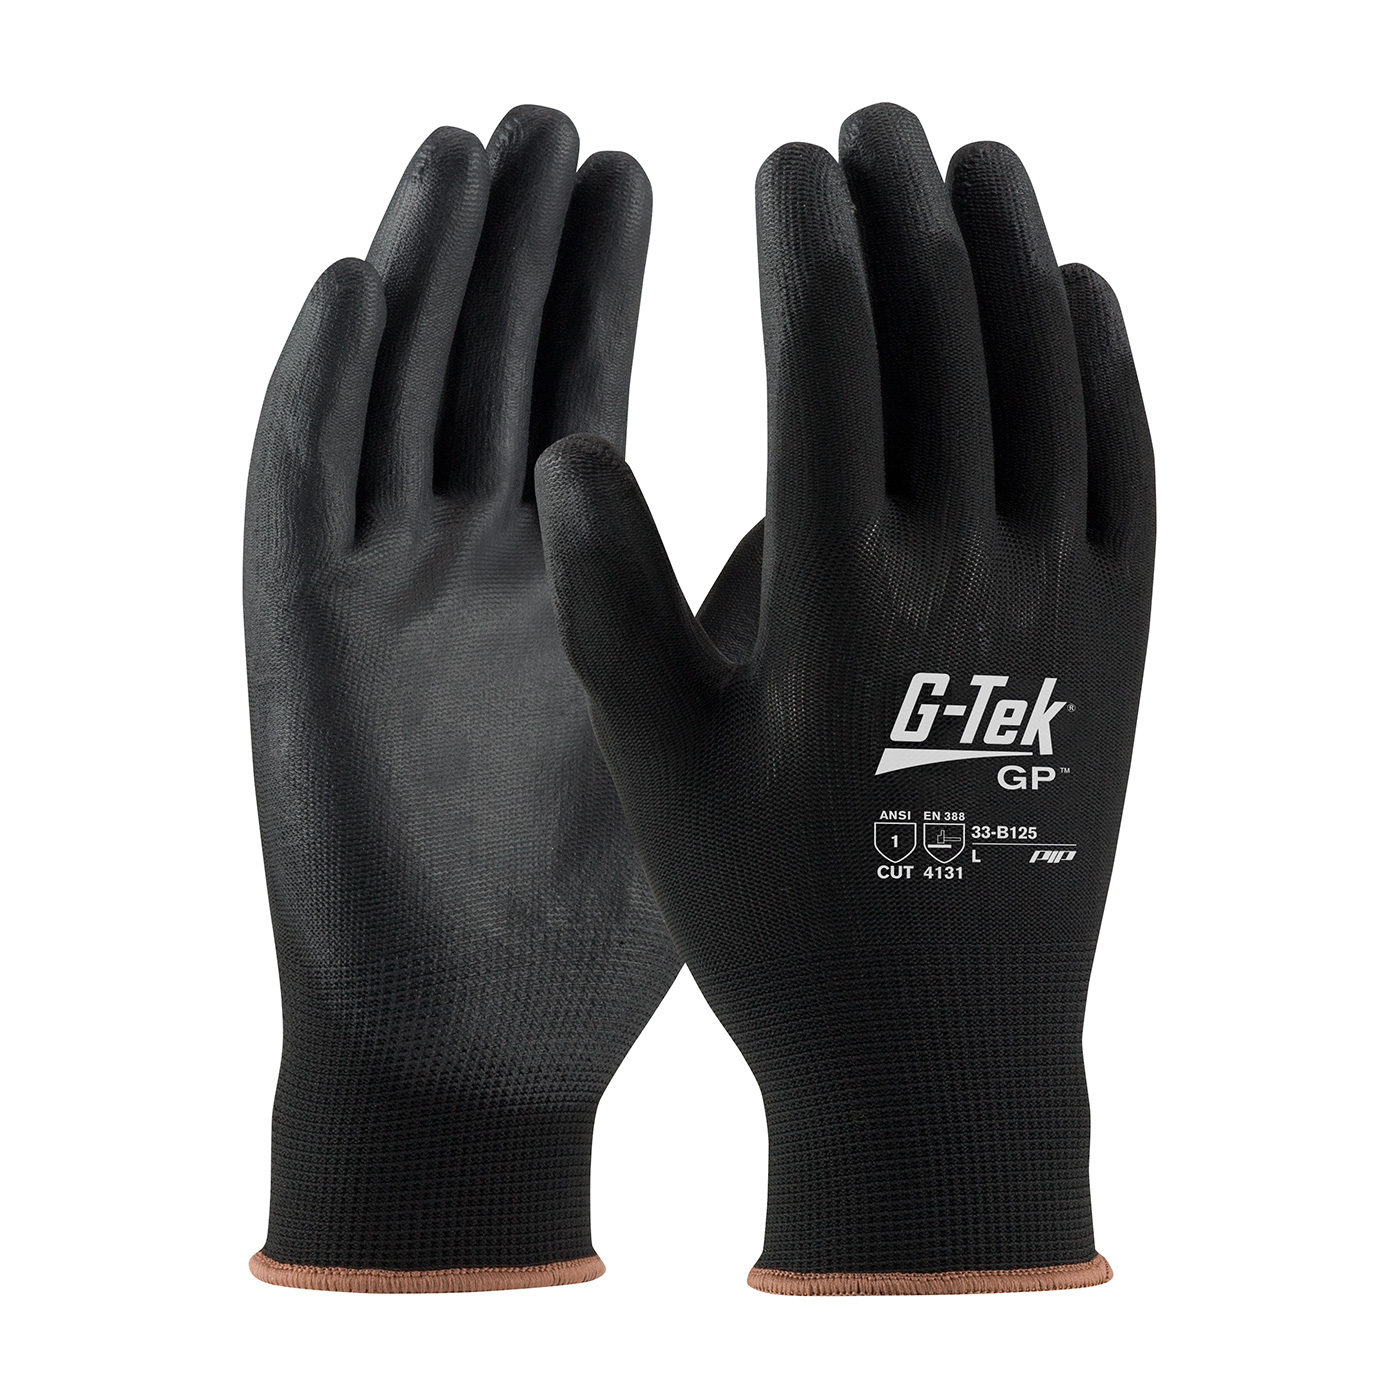 PIP 33-B125/M G-Tek GP Hi-Vis Seamless Knit Polyester Glove with Polyurethane Coated Smooth Grip on Palm & Fingers - Medium PID-33 B125 M